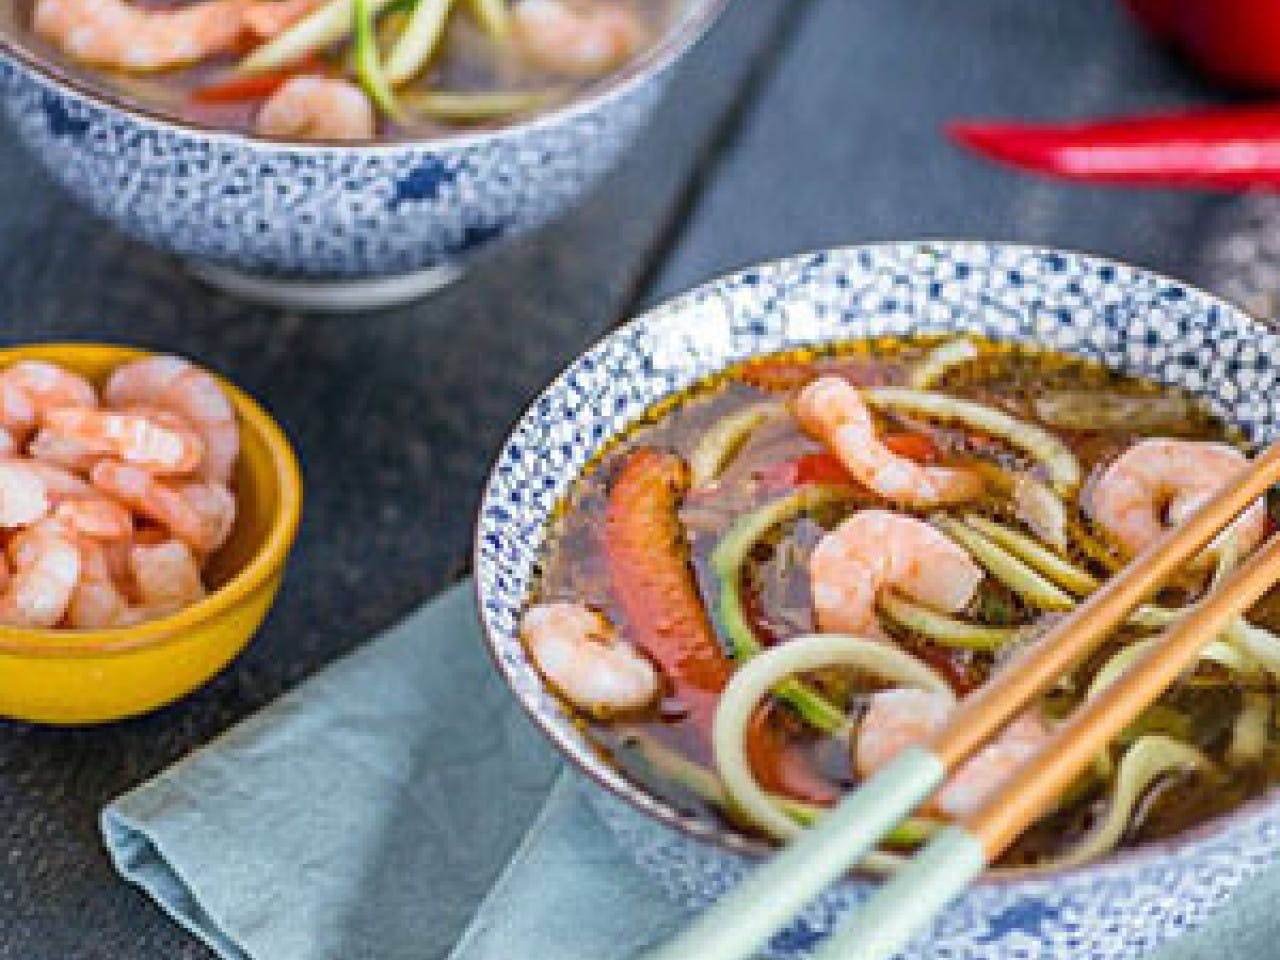 Zoodle soup with shrimps